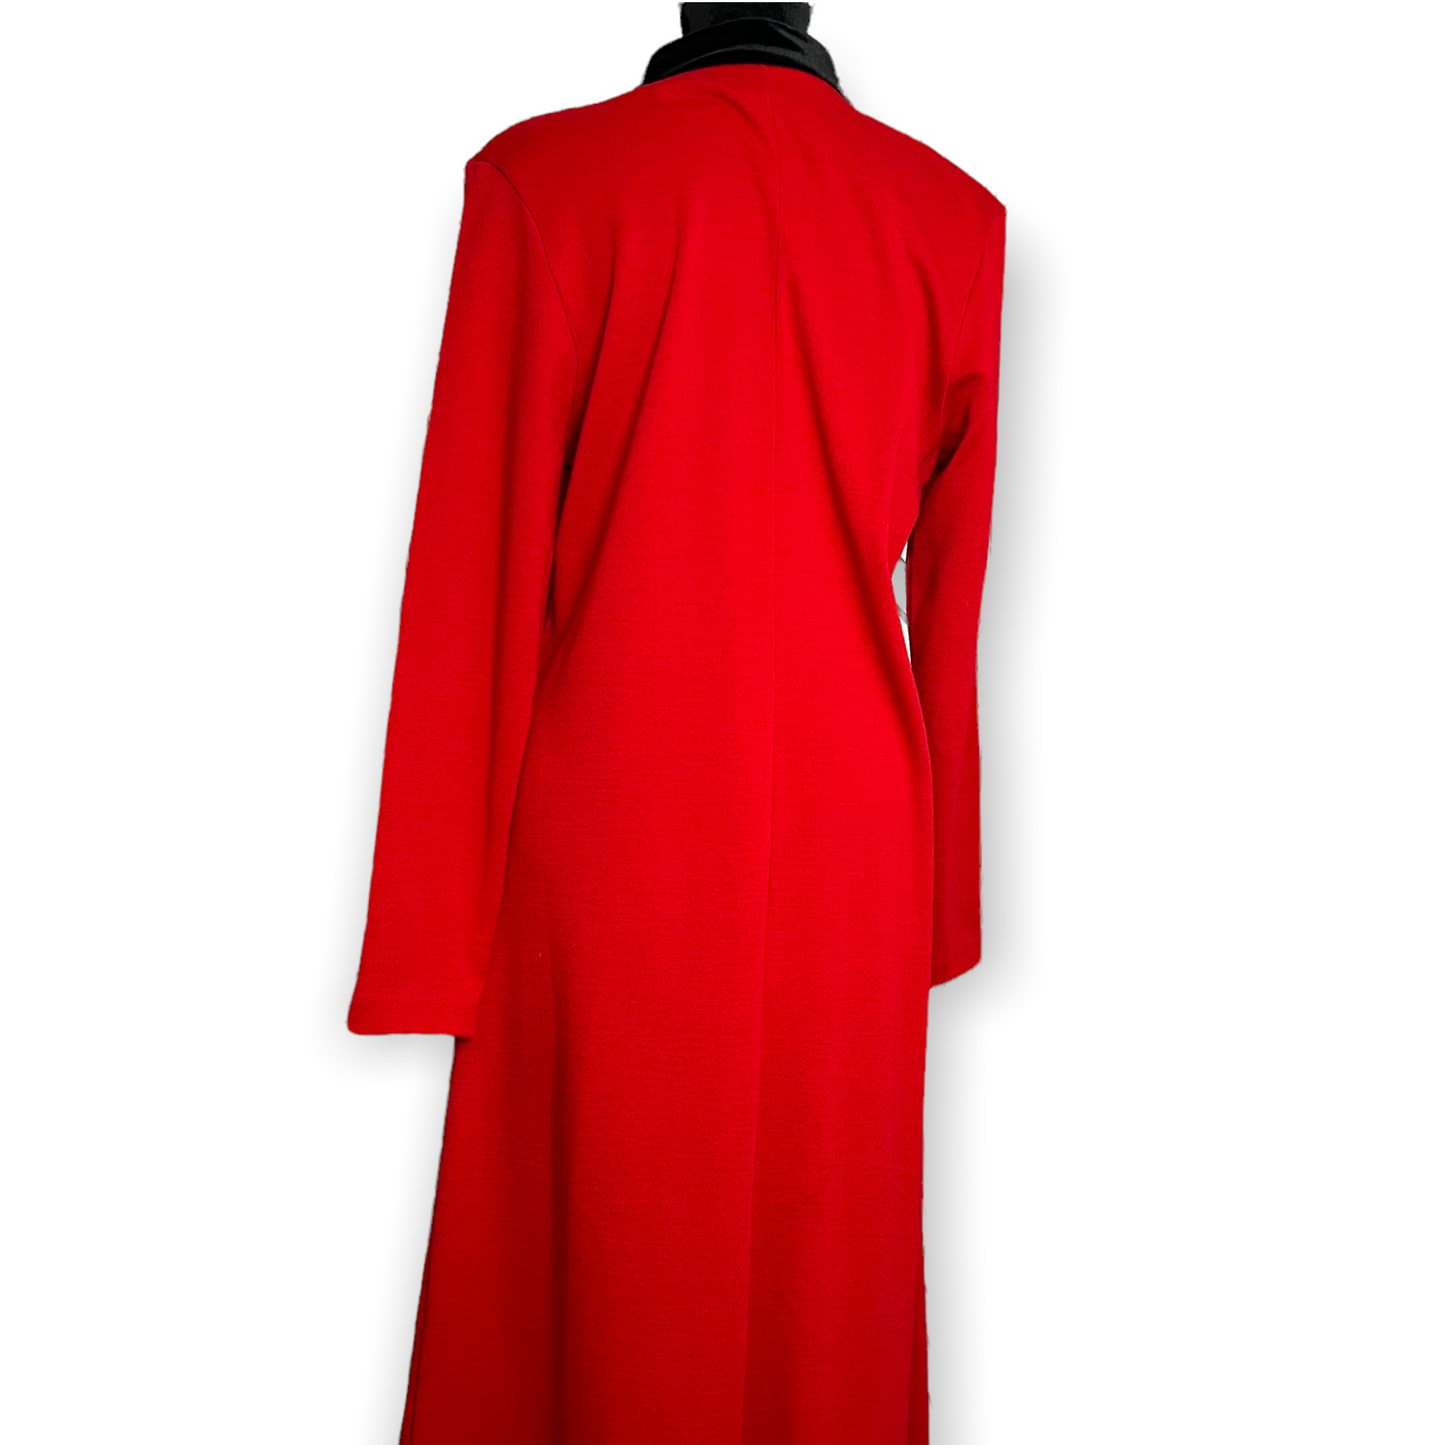 Vintage Melissa Harper Red Long Sleeve Dress Size Small